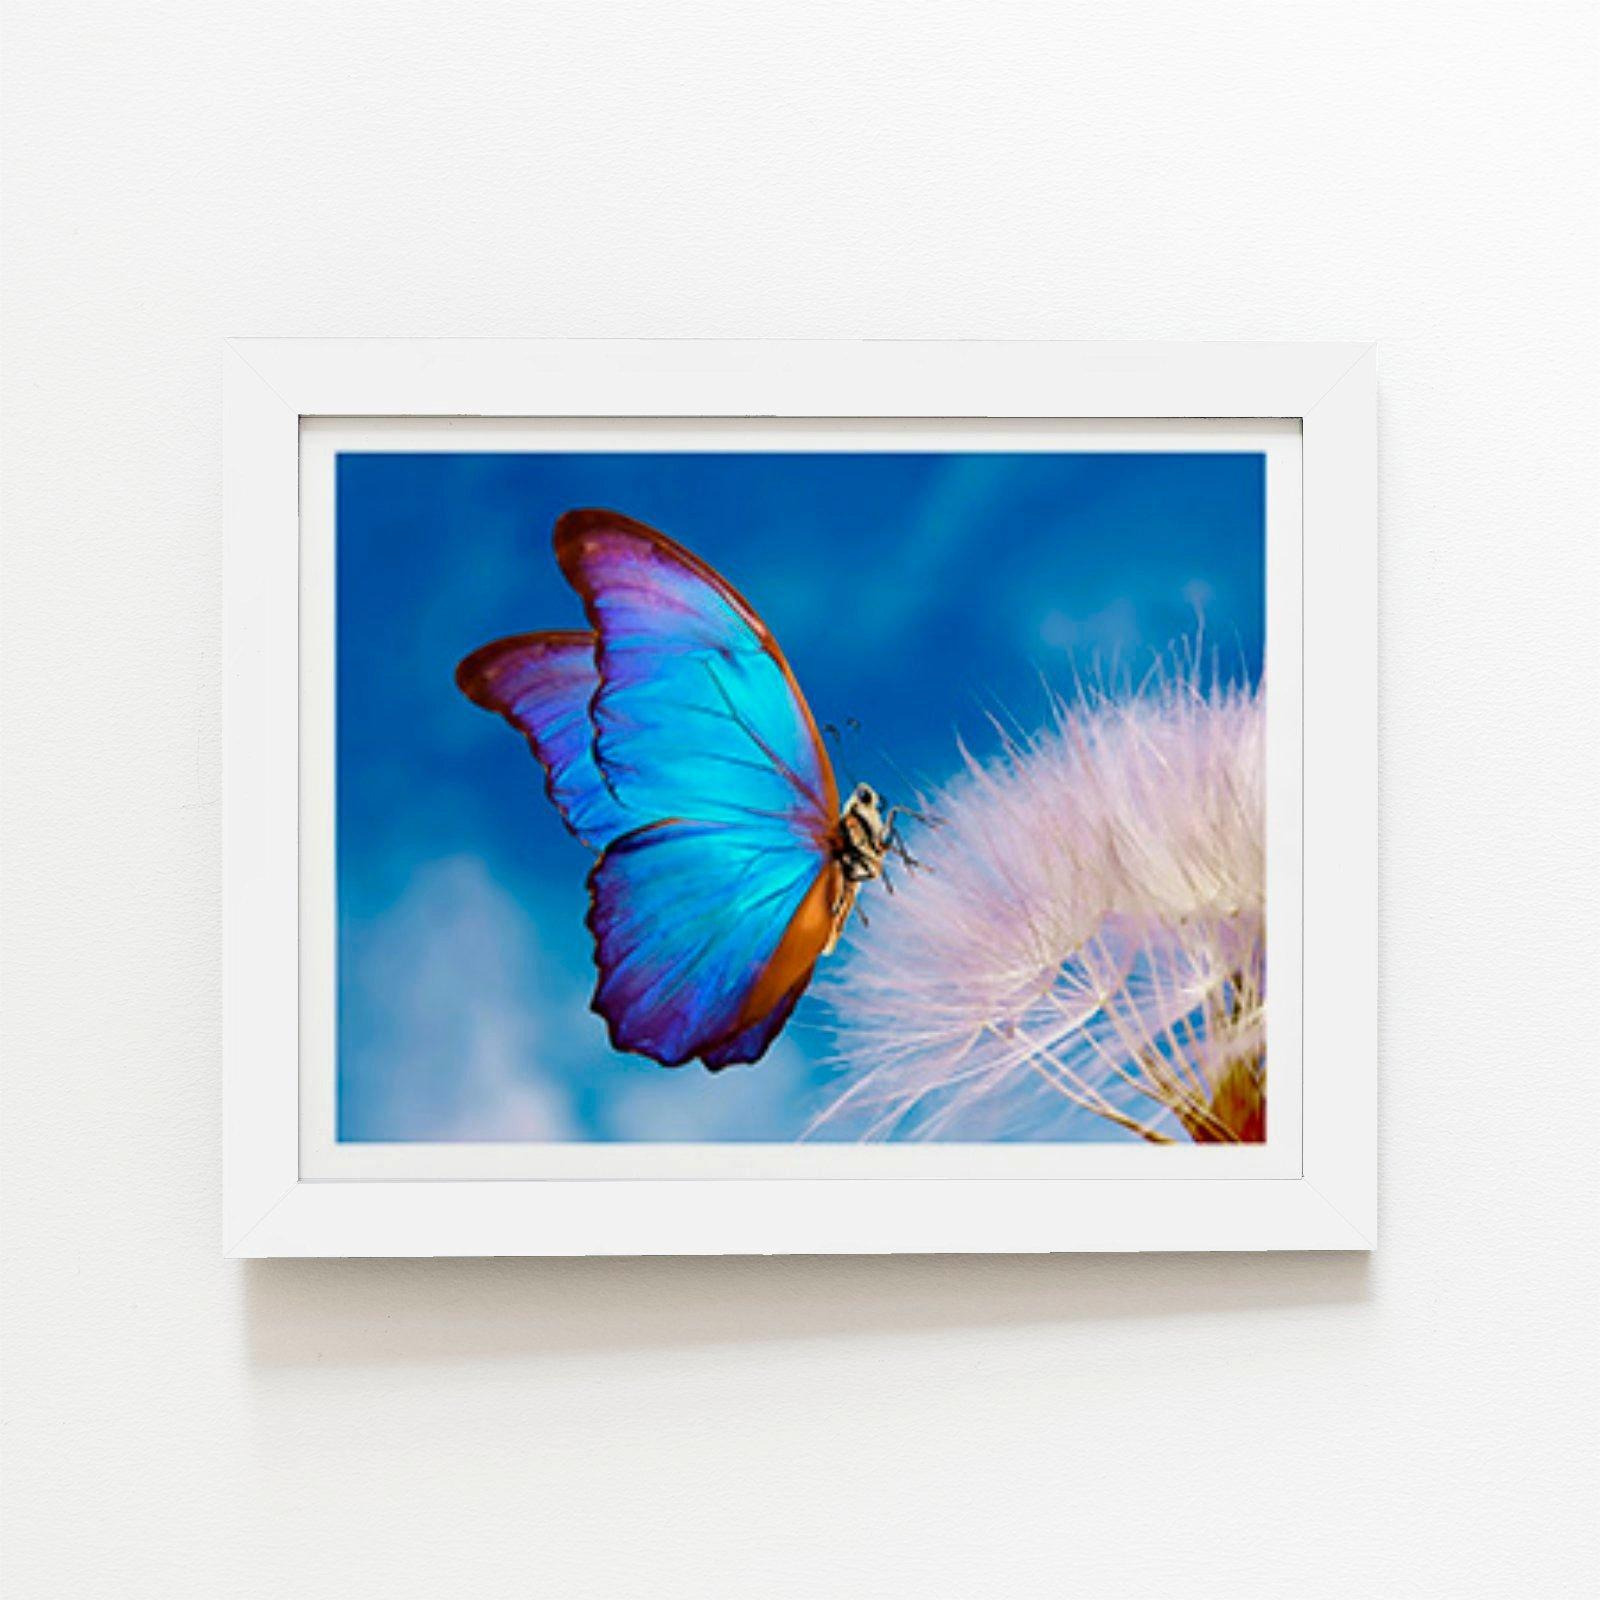 Butterfly And Dandelion Framed Art Print - image 1